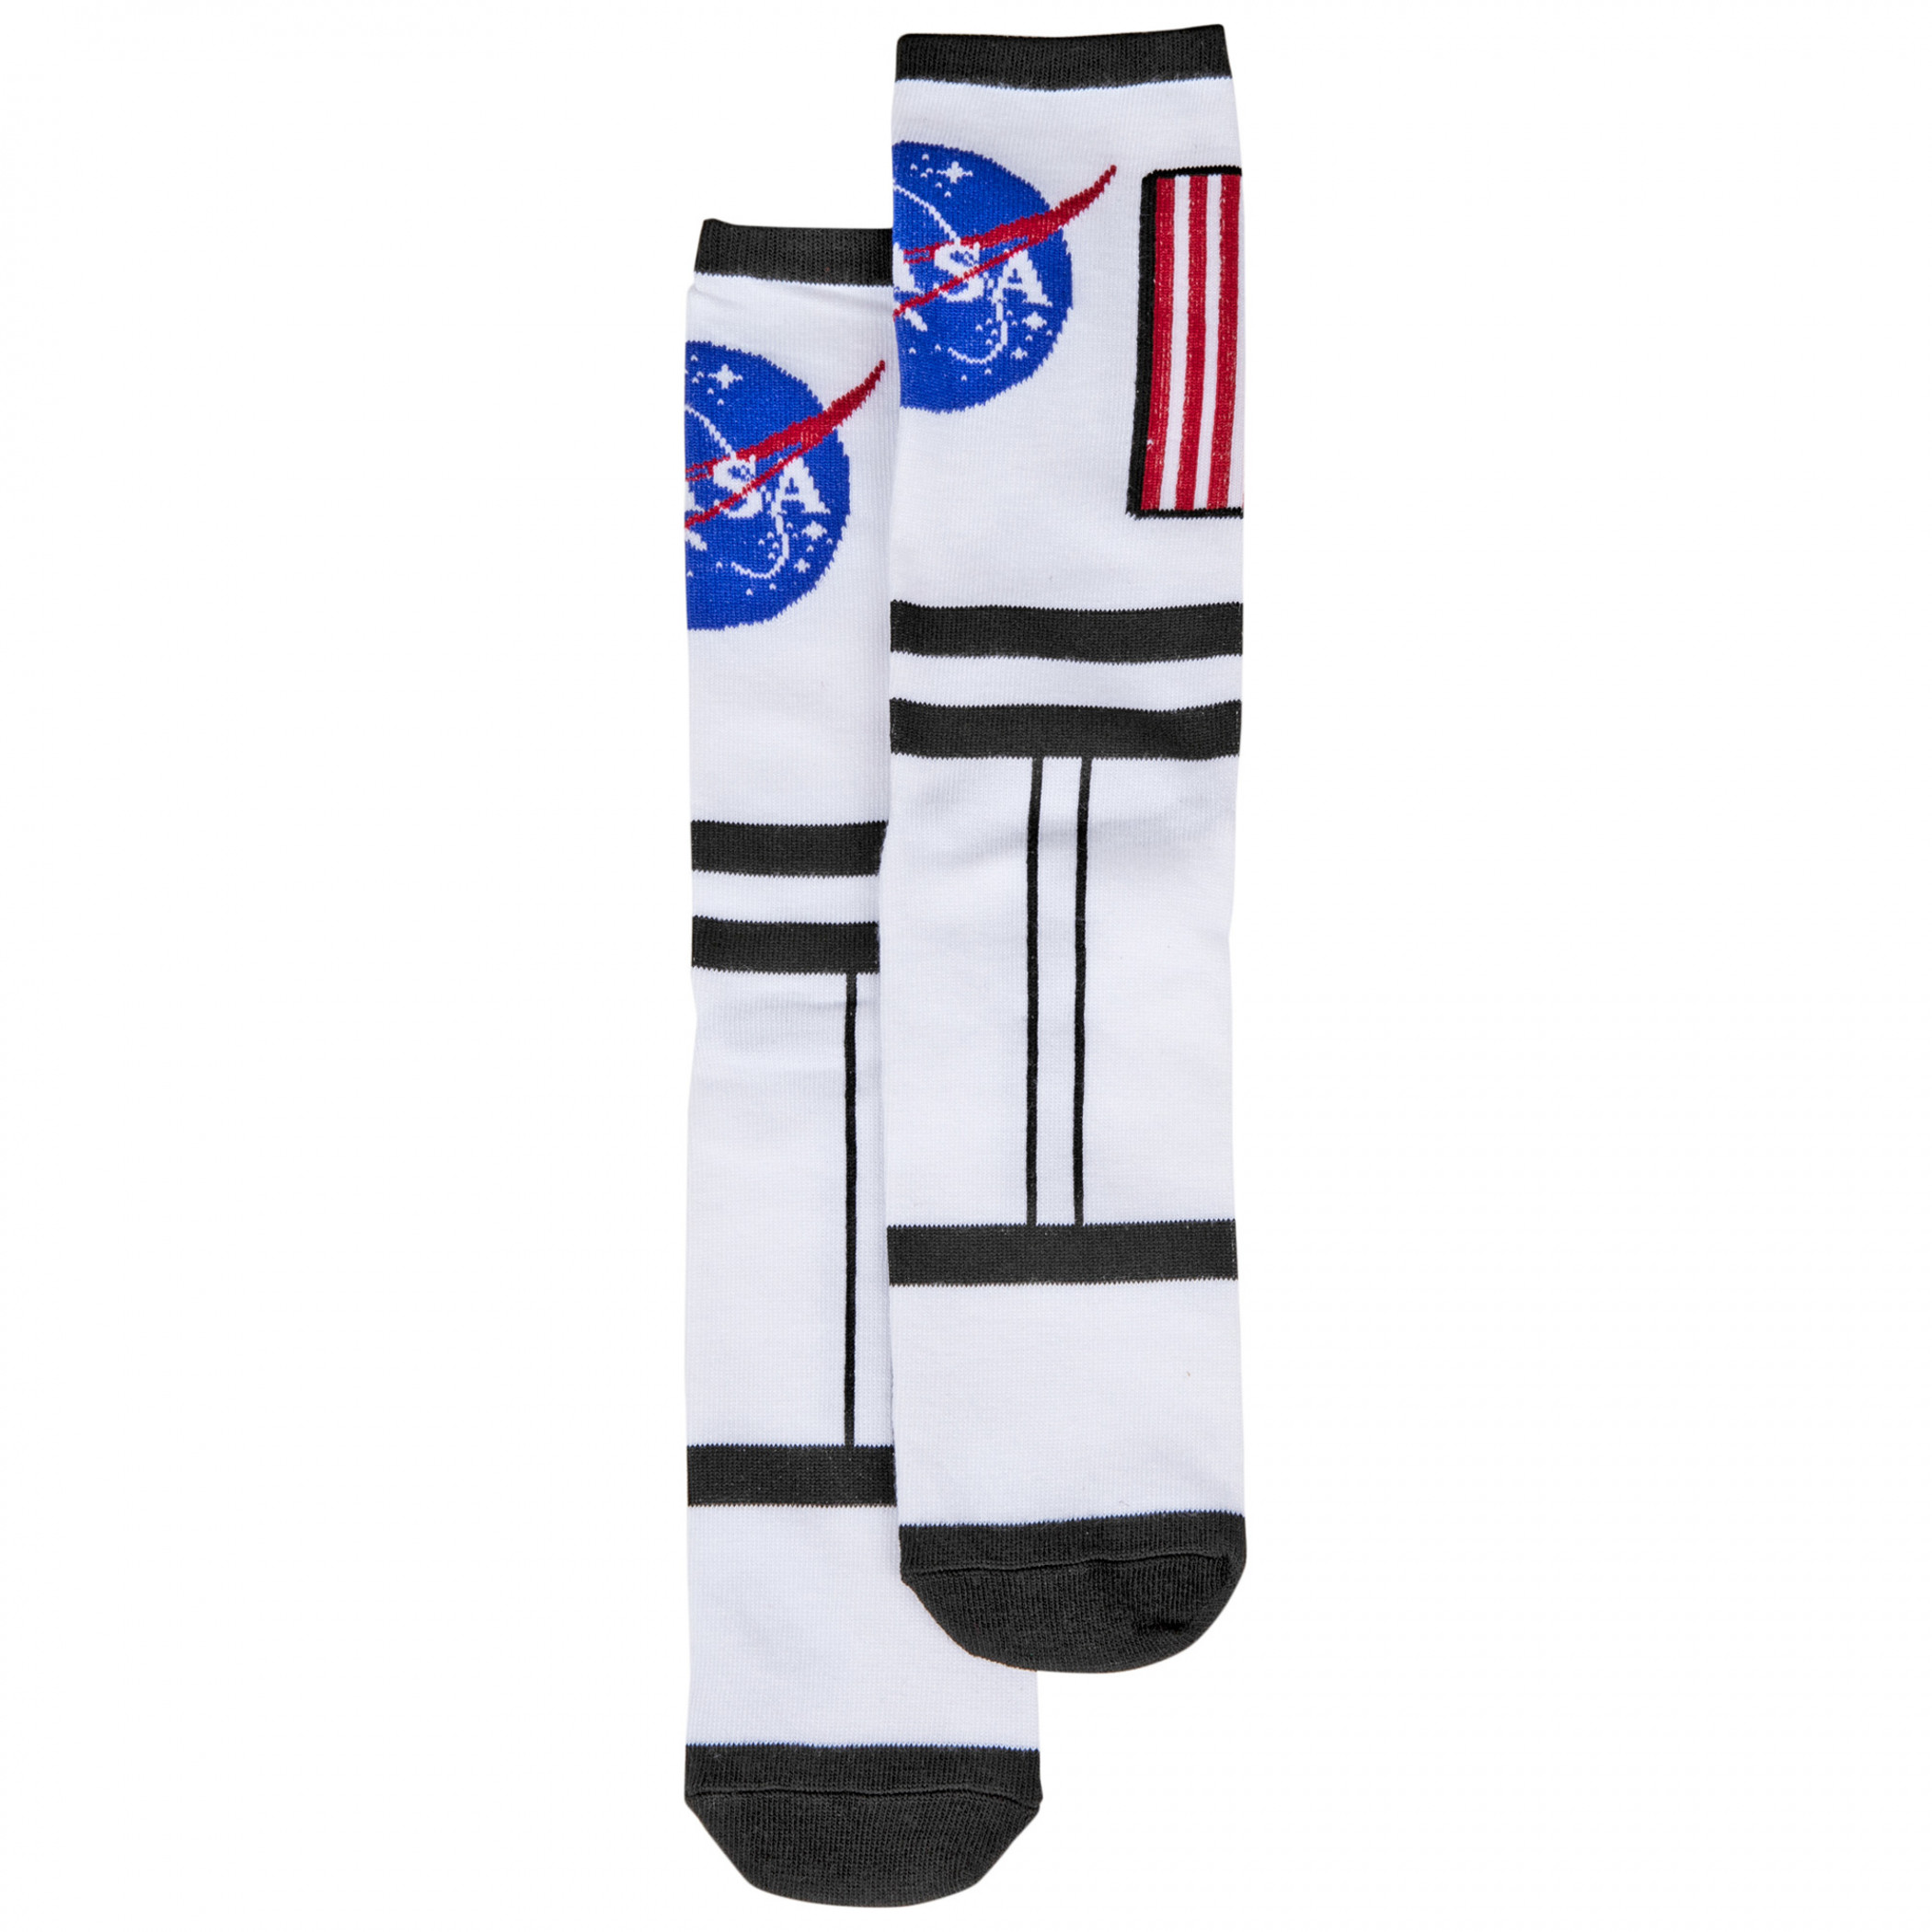 NASA Space Shuttle Crew Socks